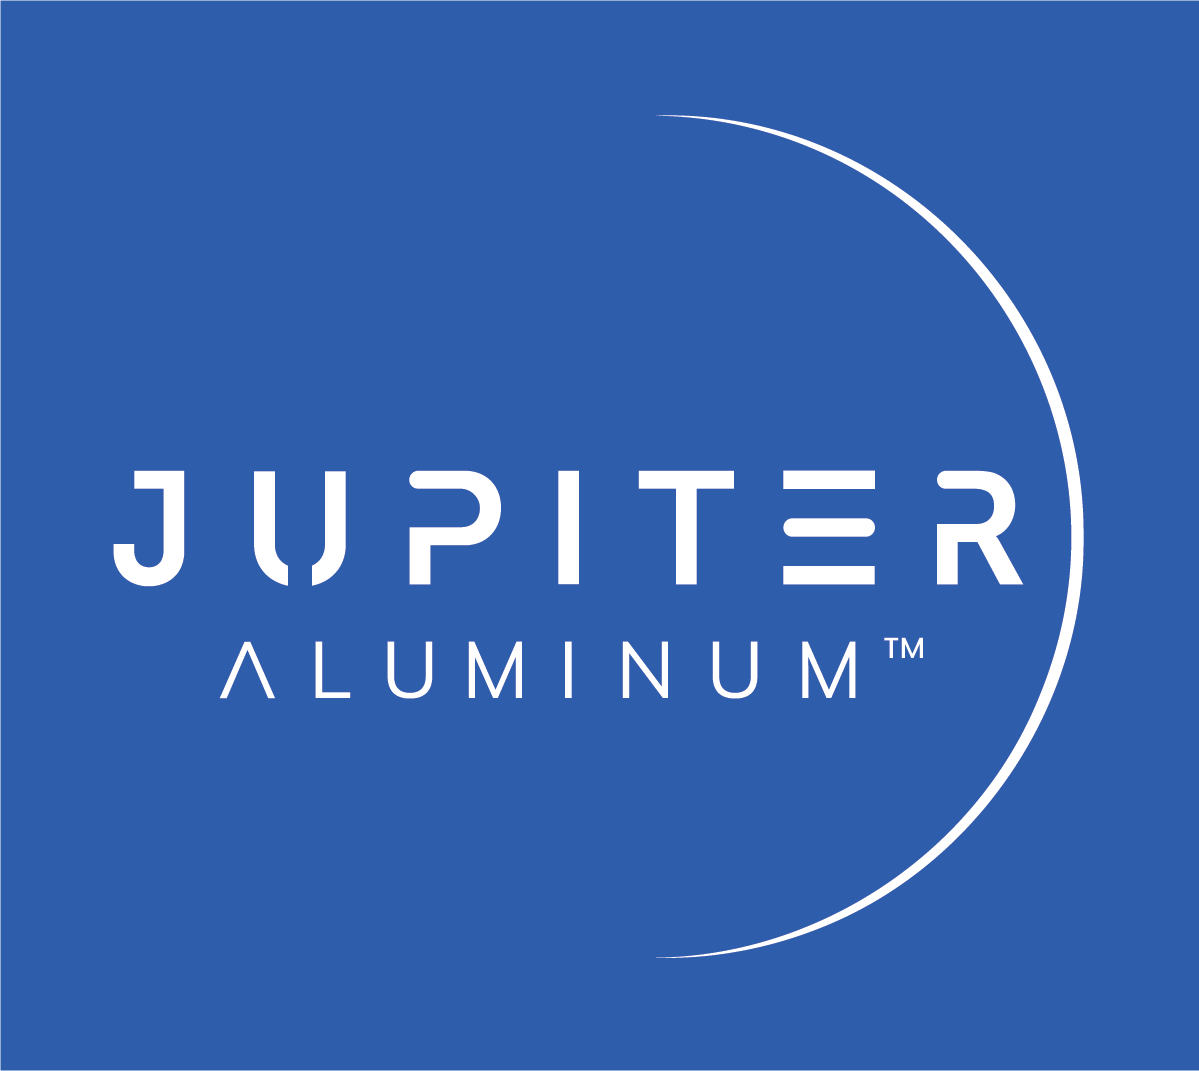 Jupiter Aluminum